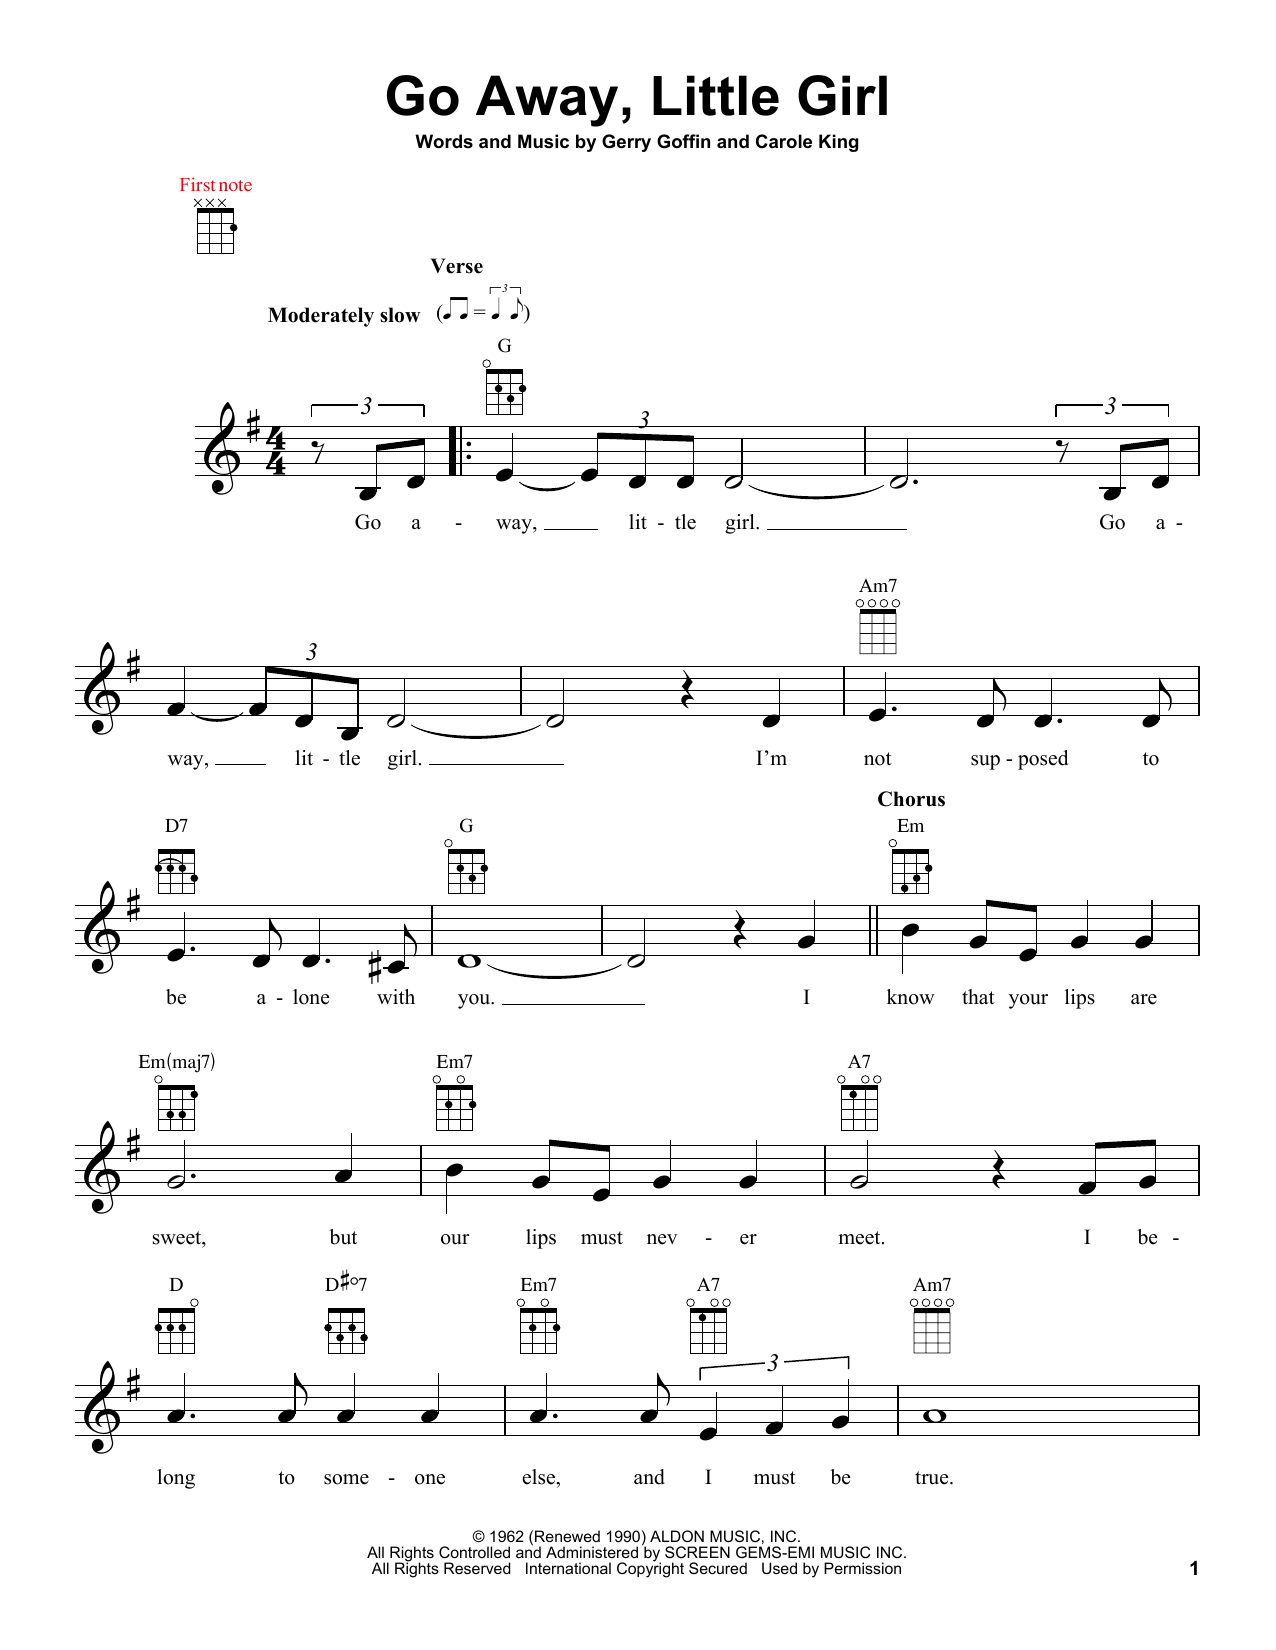 Donny Osmond Go Away, Little Girl Sheet Music Notes & Chords for Flute - Download or Print PDF